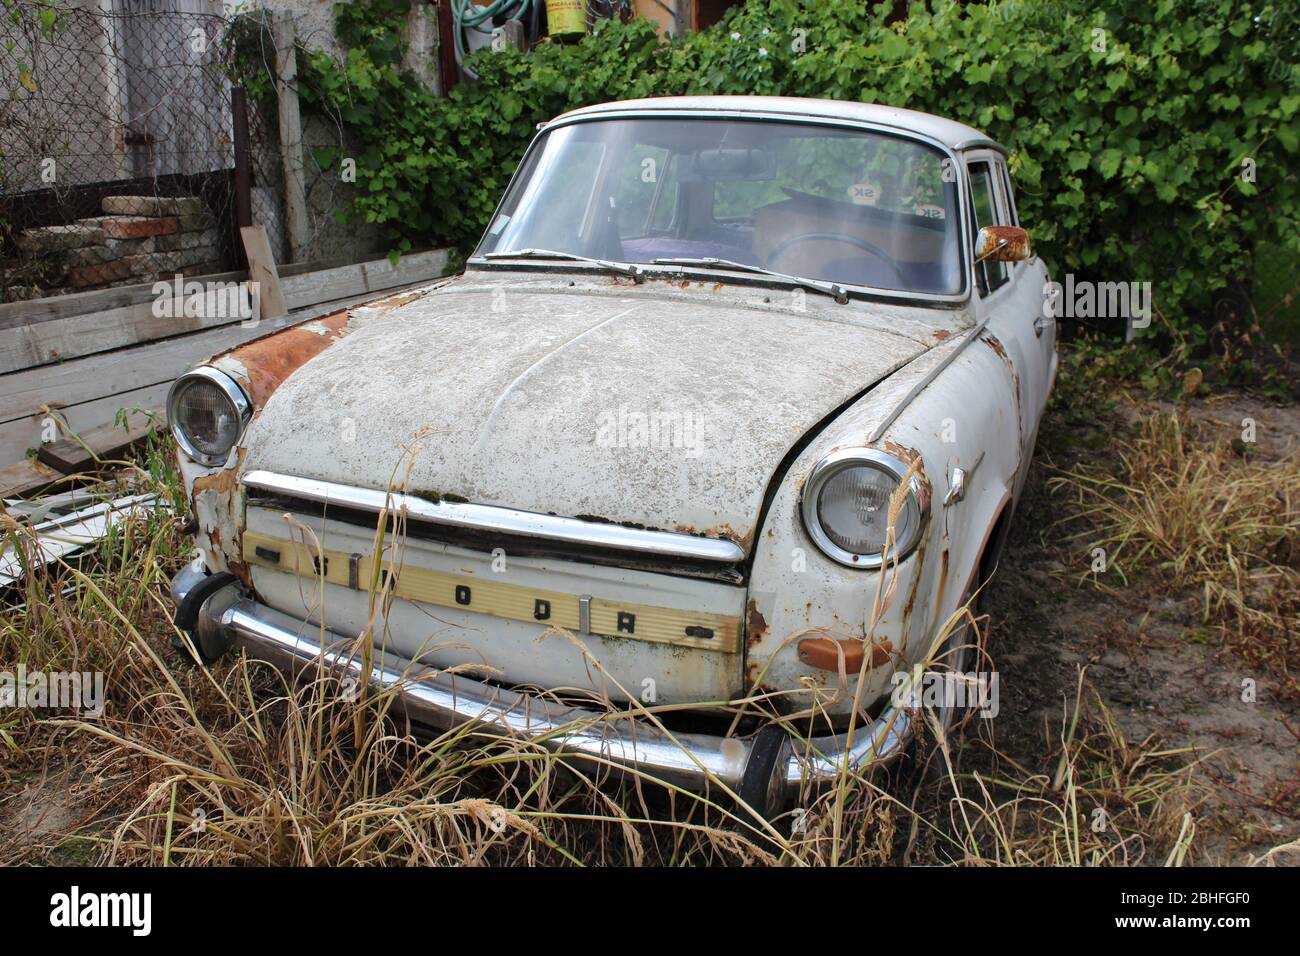 abandoned, rusty vintage Skoda 1000 MB car, 1960s Stock Photo